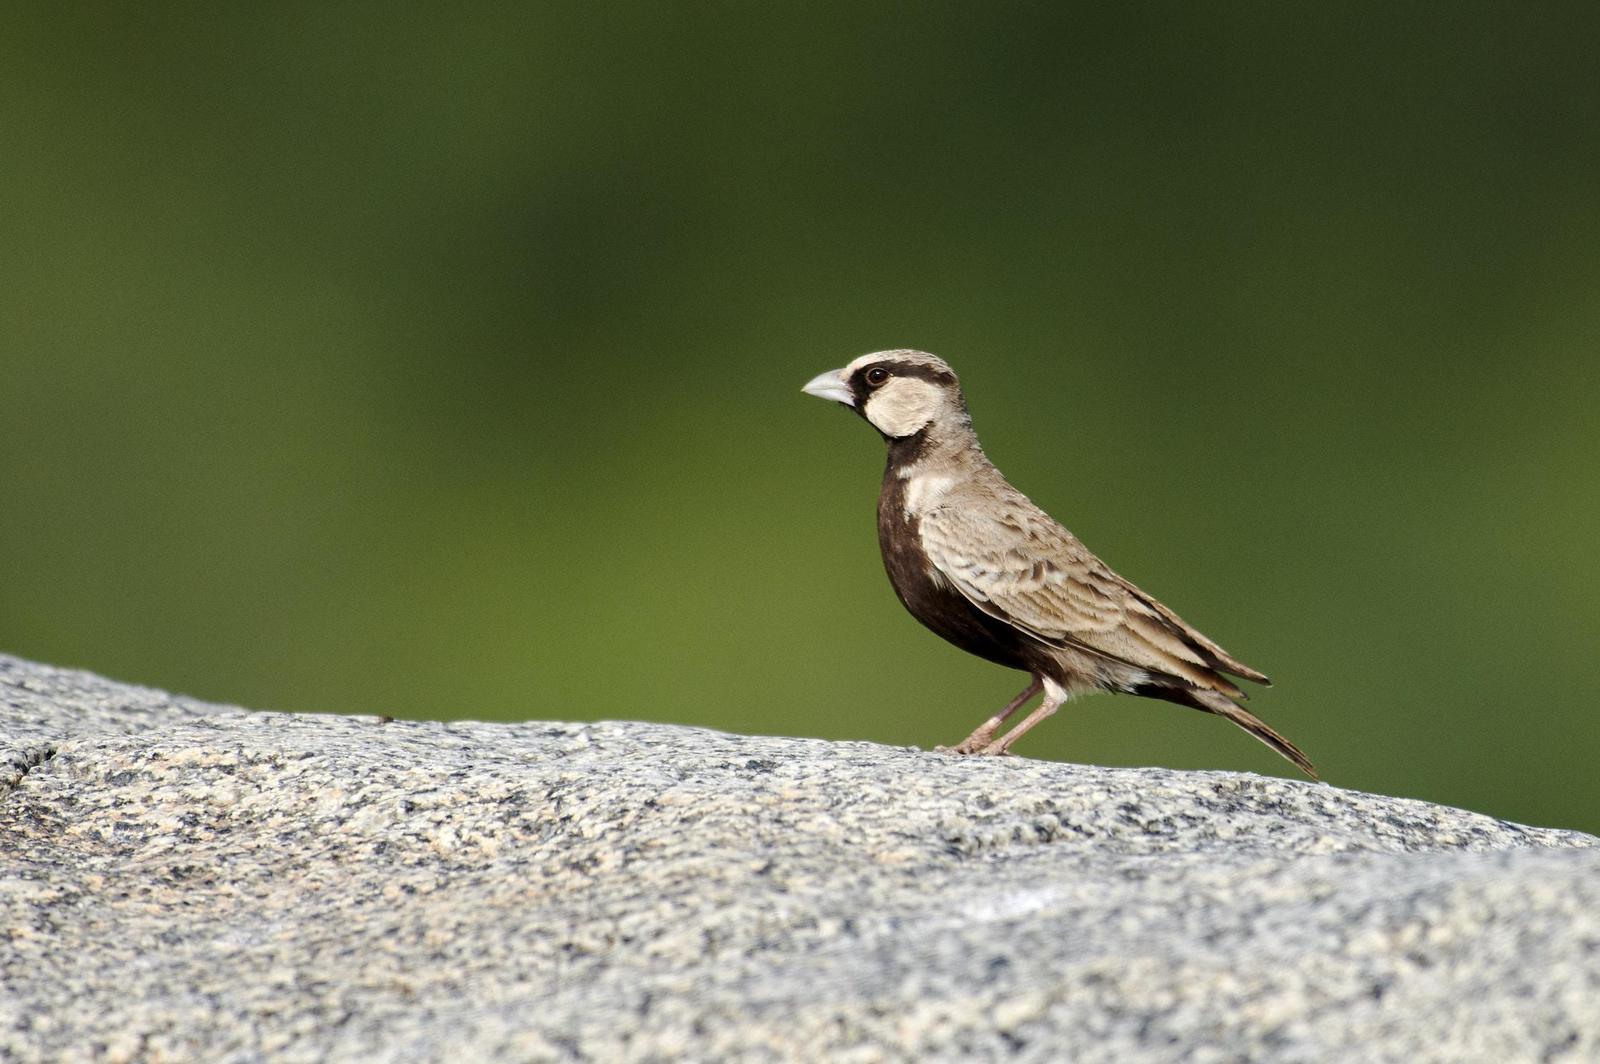 Ashy-crowned Sparrow-Lark Photo by Simepreet Cheema